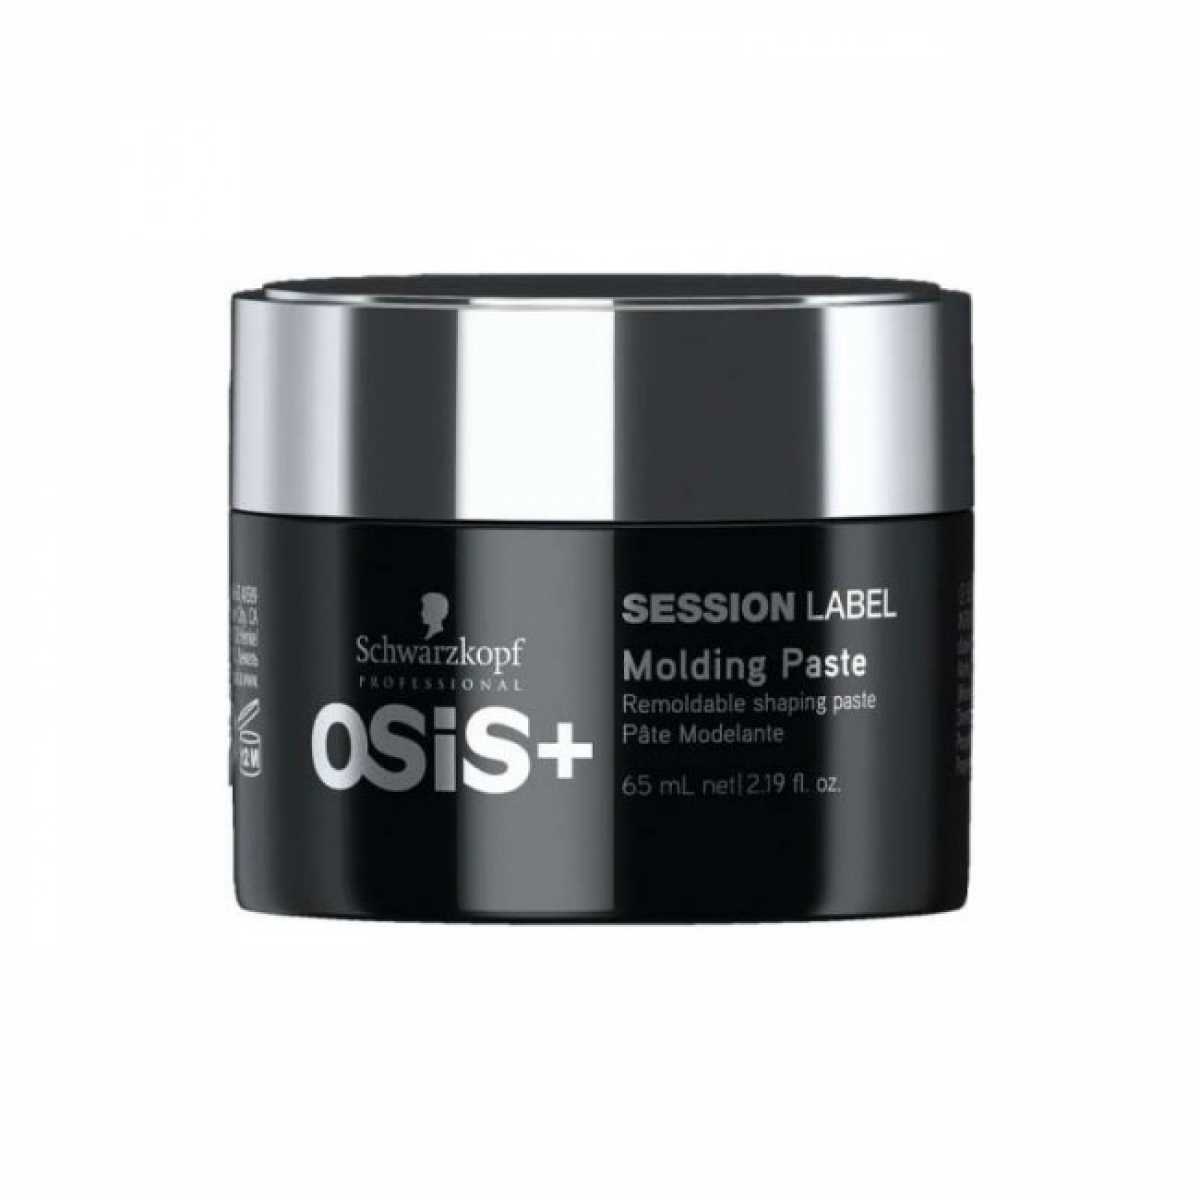 OSiS+ Session Label Molding Paste Şekillendirici Mat Krem 65ml